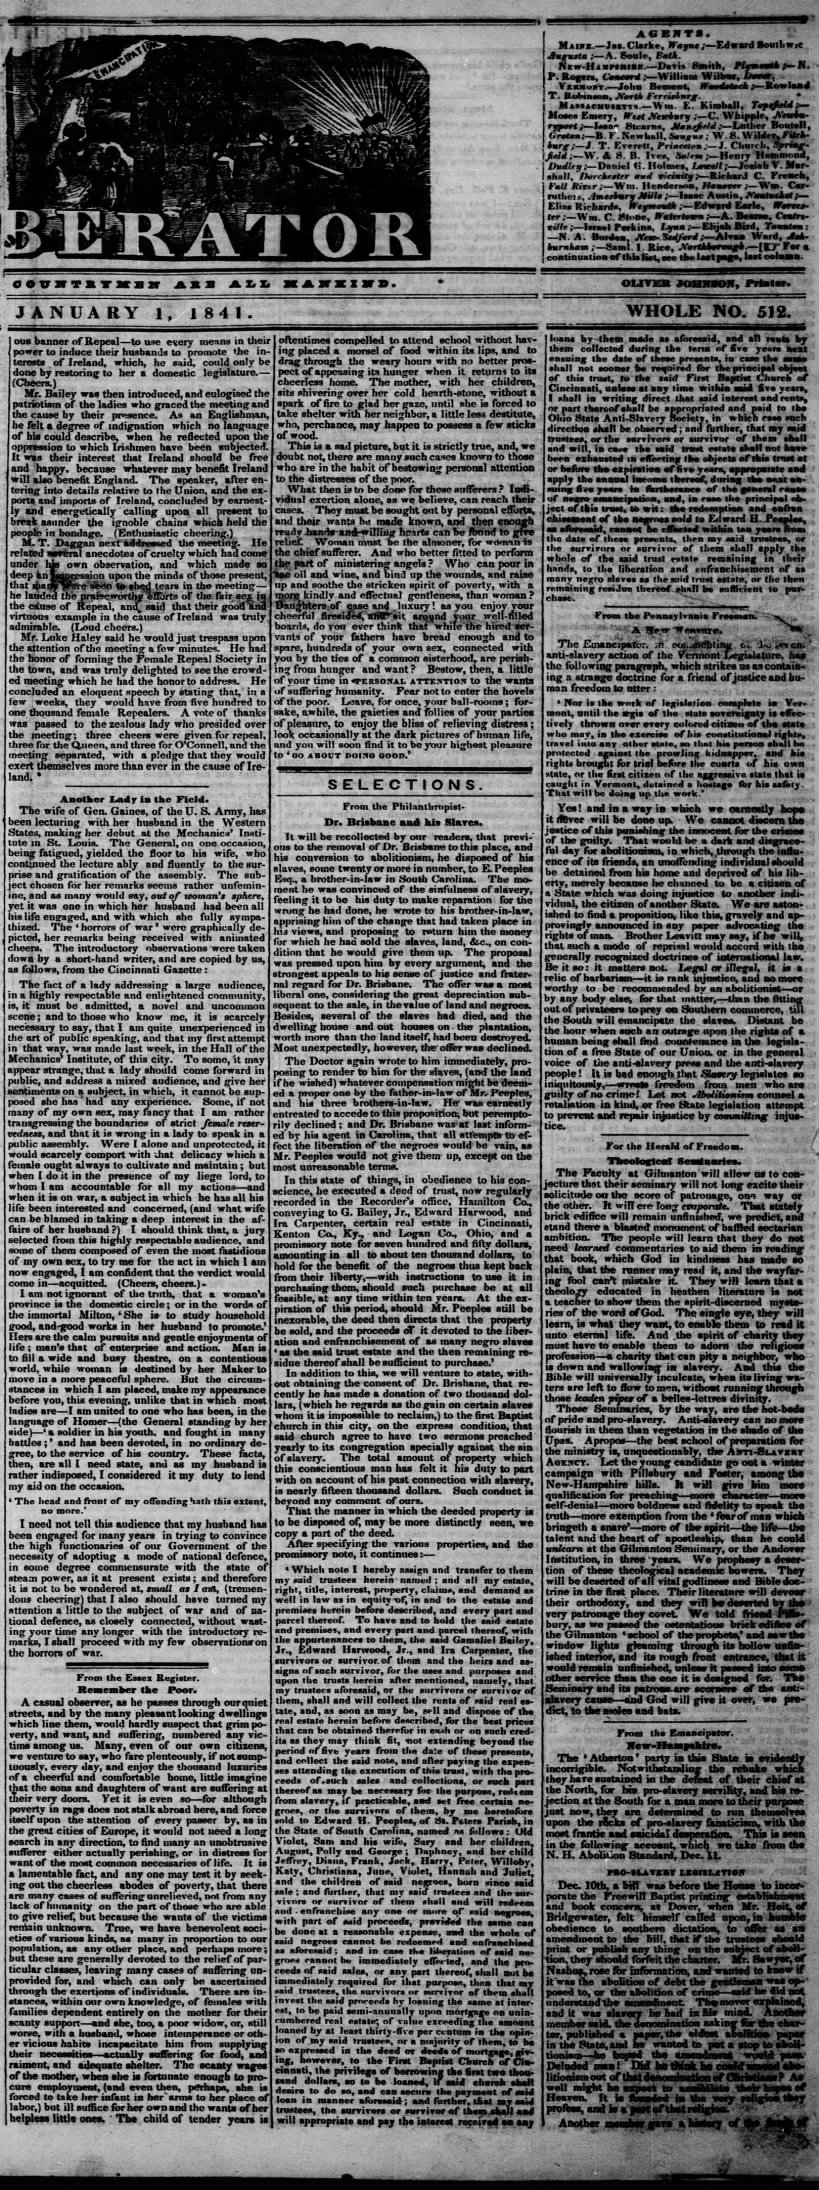 01 JAN 1841 FRI, THE LIBERATOR, PAGE 1, SECTION 2